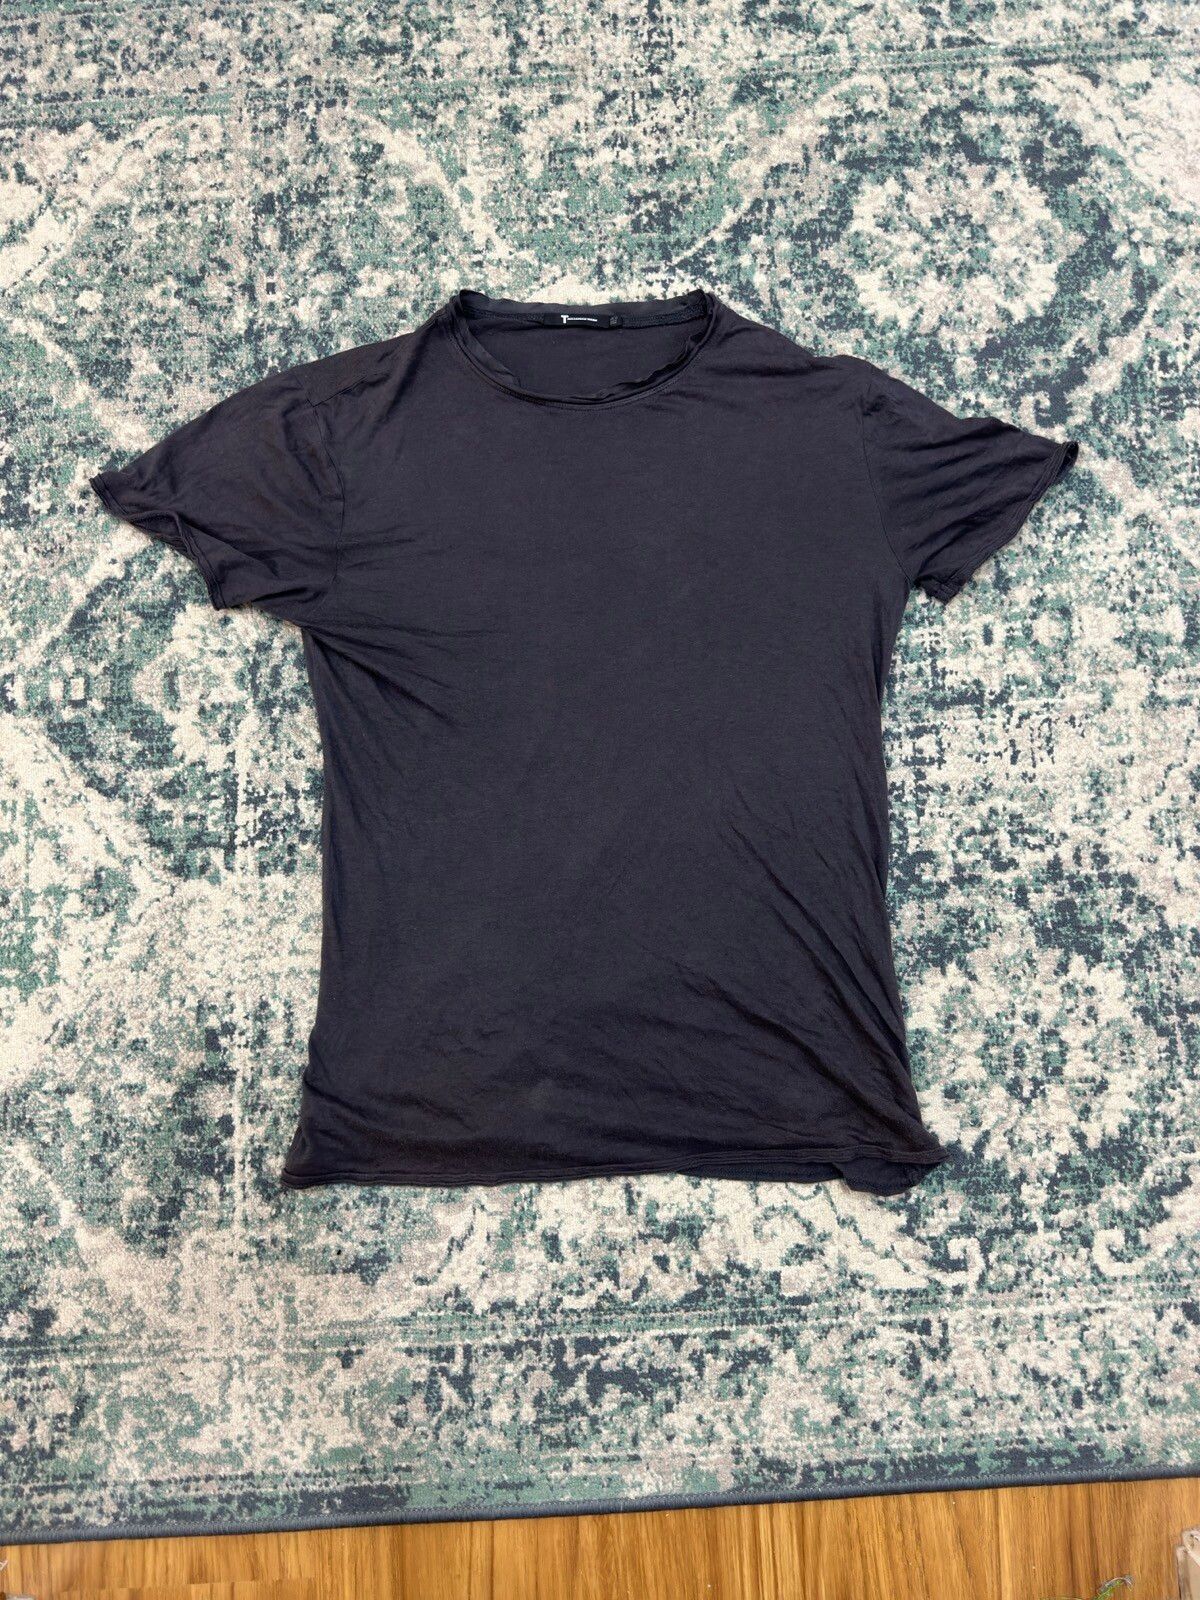 T Alexander Wang Basic Black T-shirt - 2